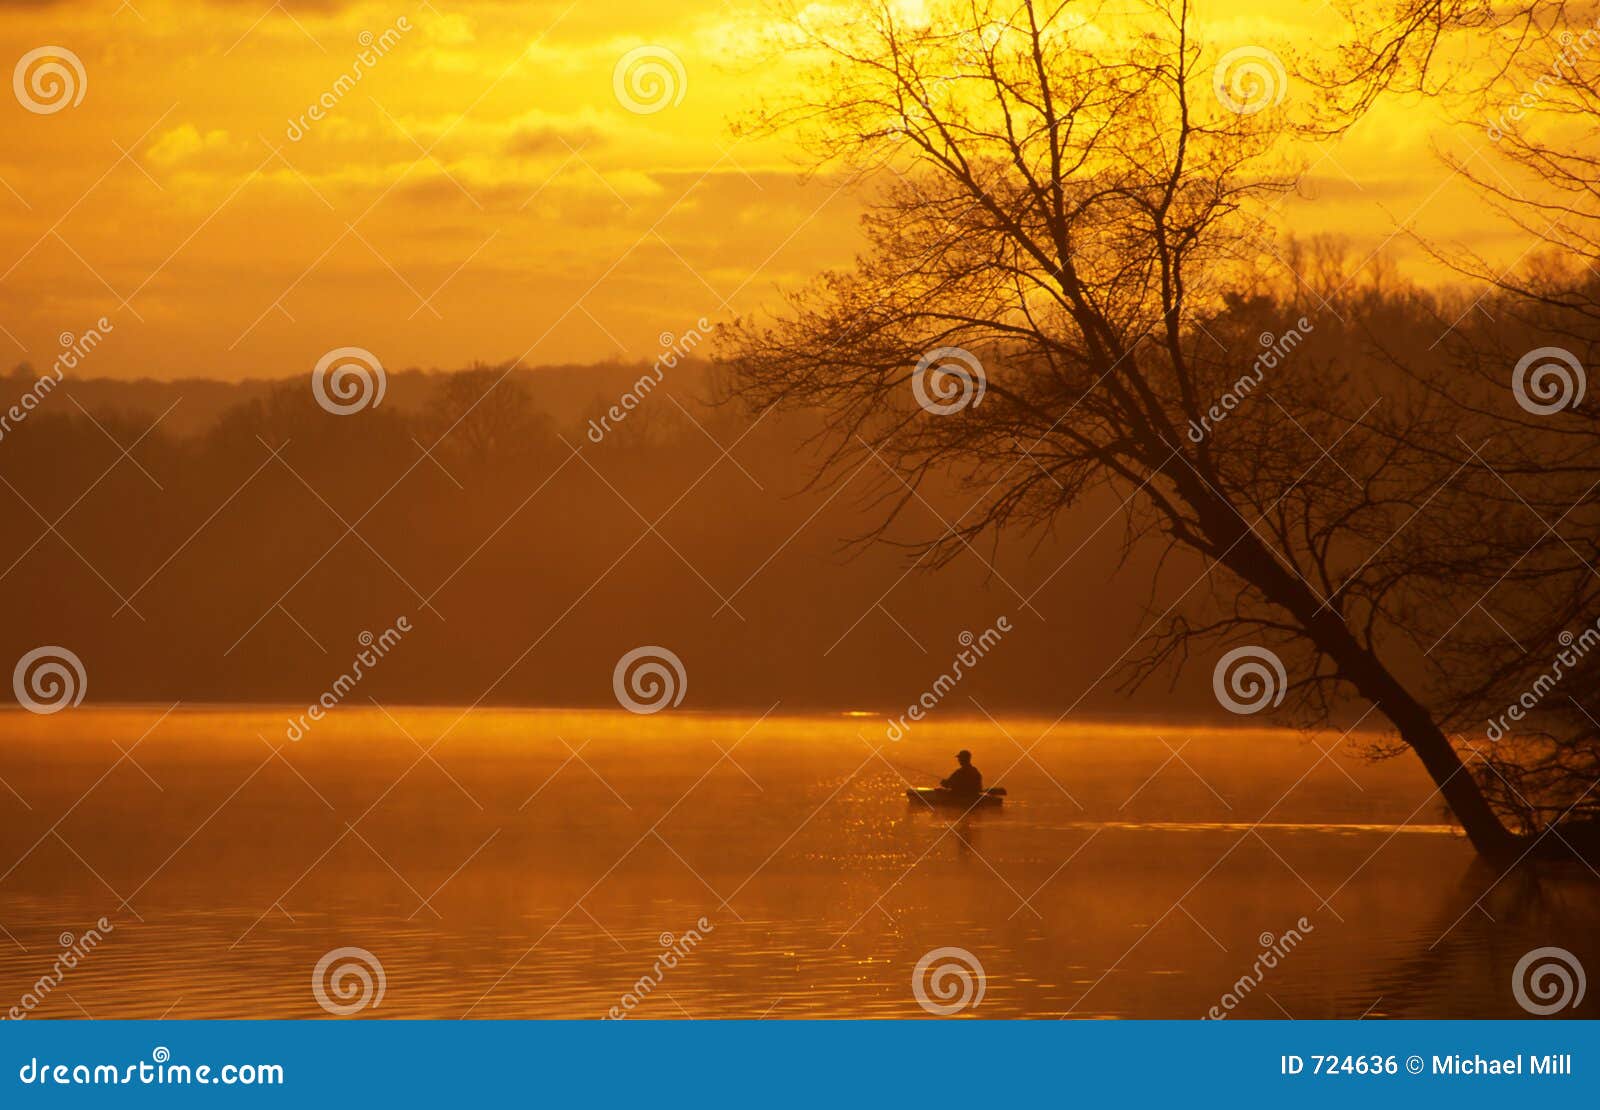 An angler fishing from a kayak on a beautiful lake at sunrise.